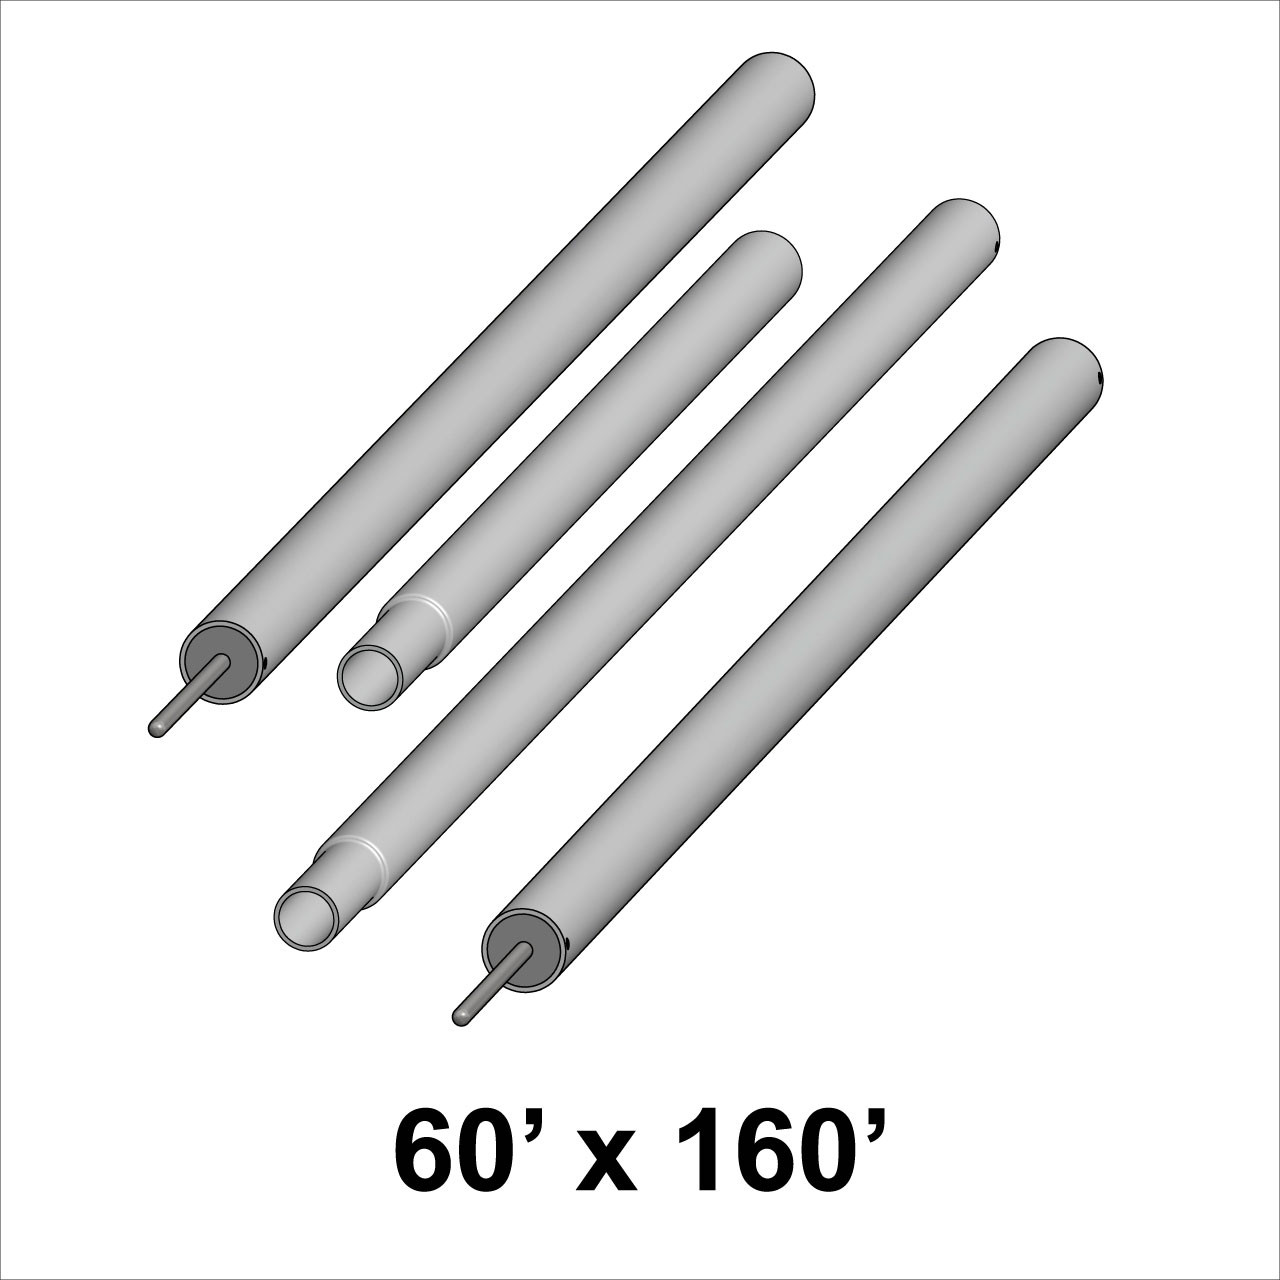 60' x 160' Classic Series Pole Kit